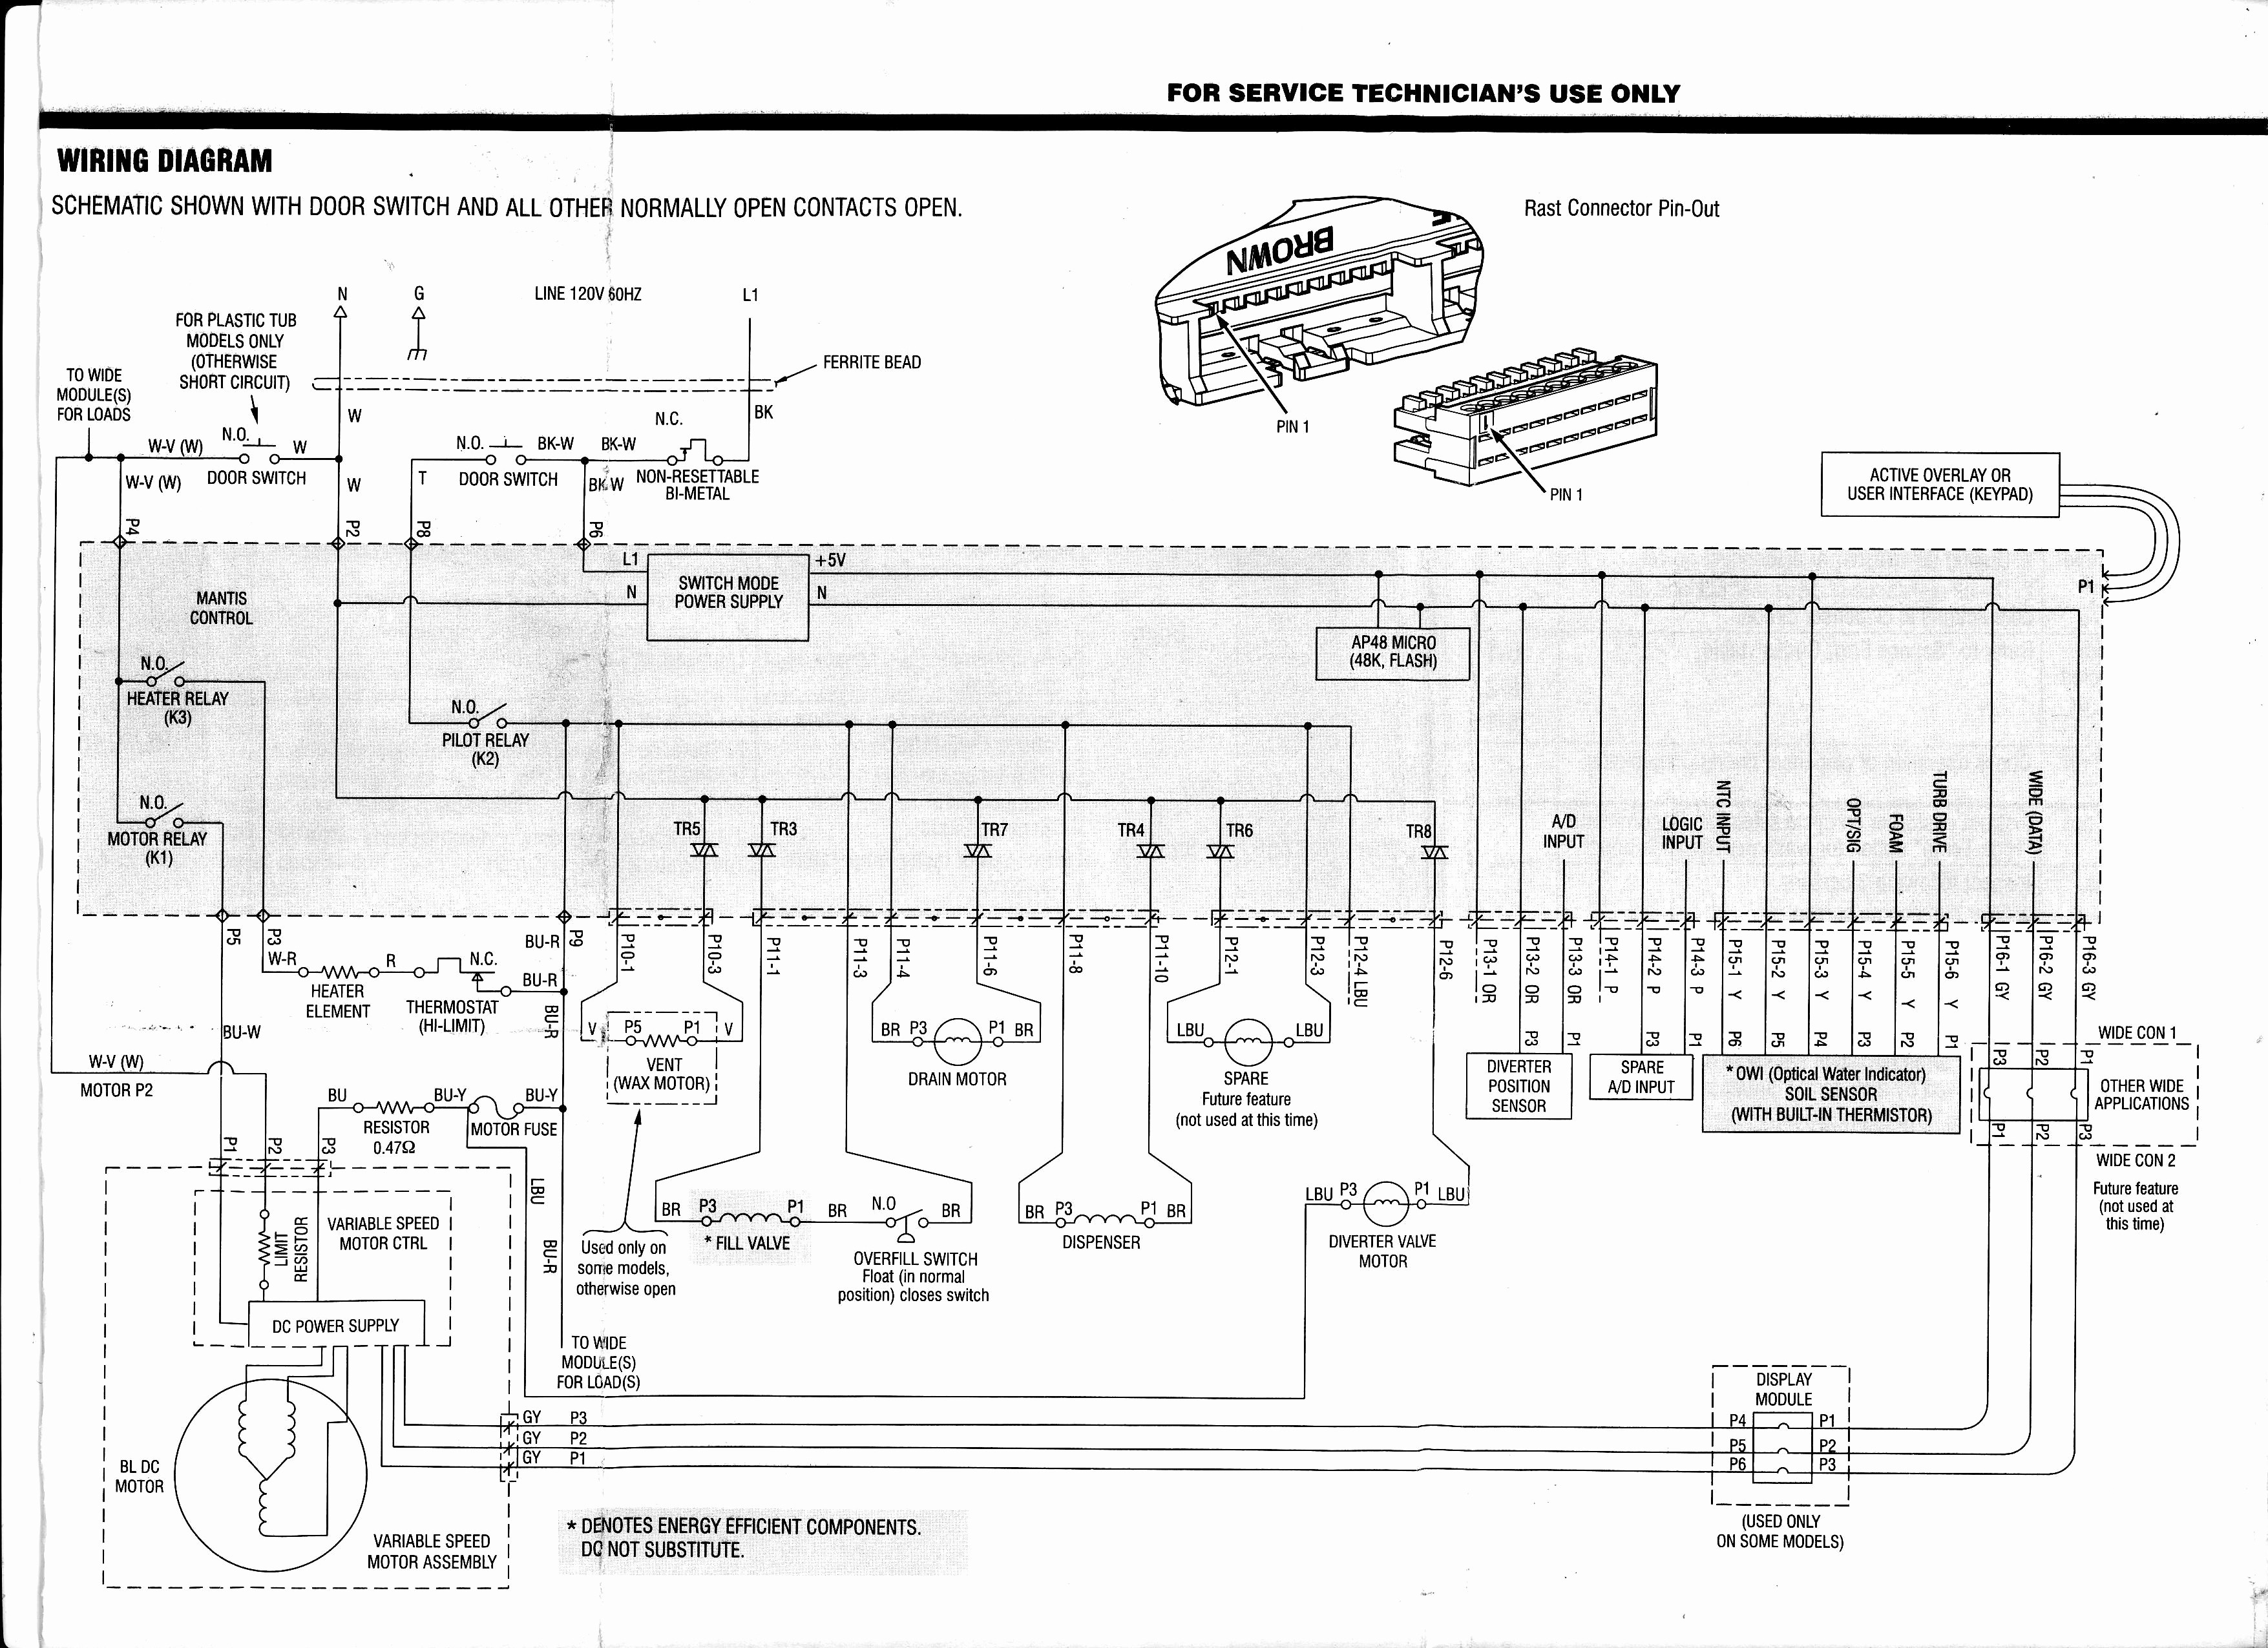 Wiring Diagram Kenmore Elite Refrigerator Wiring Diagram Kenmore Elite Wiring Diagram Sample